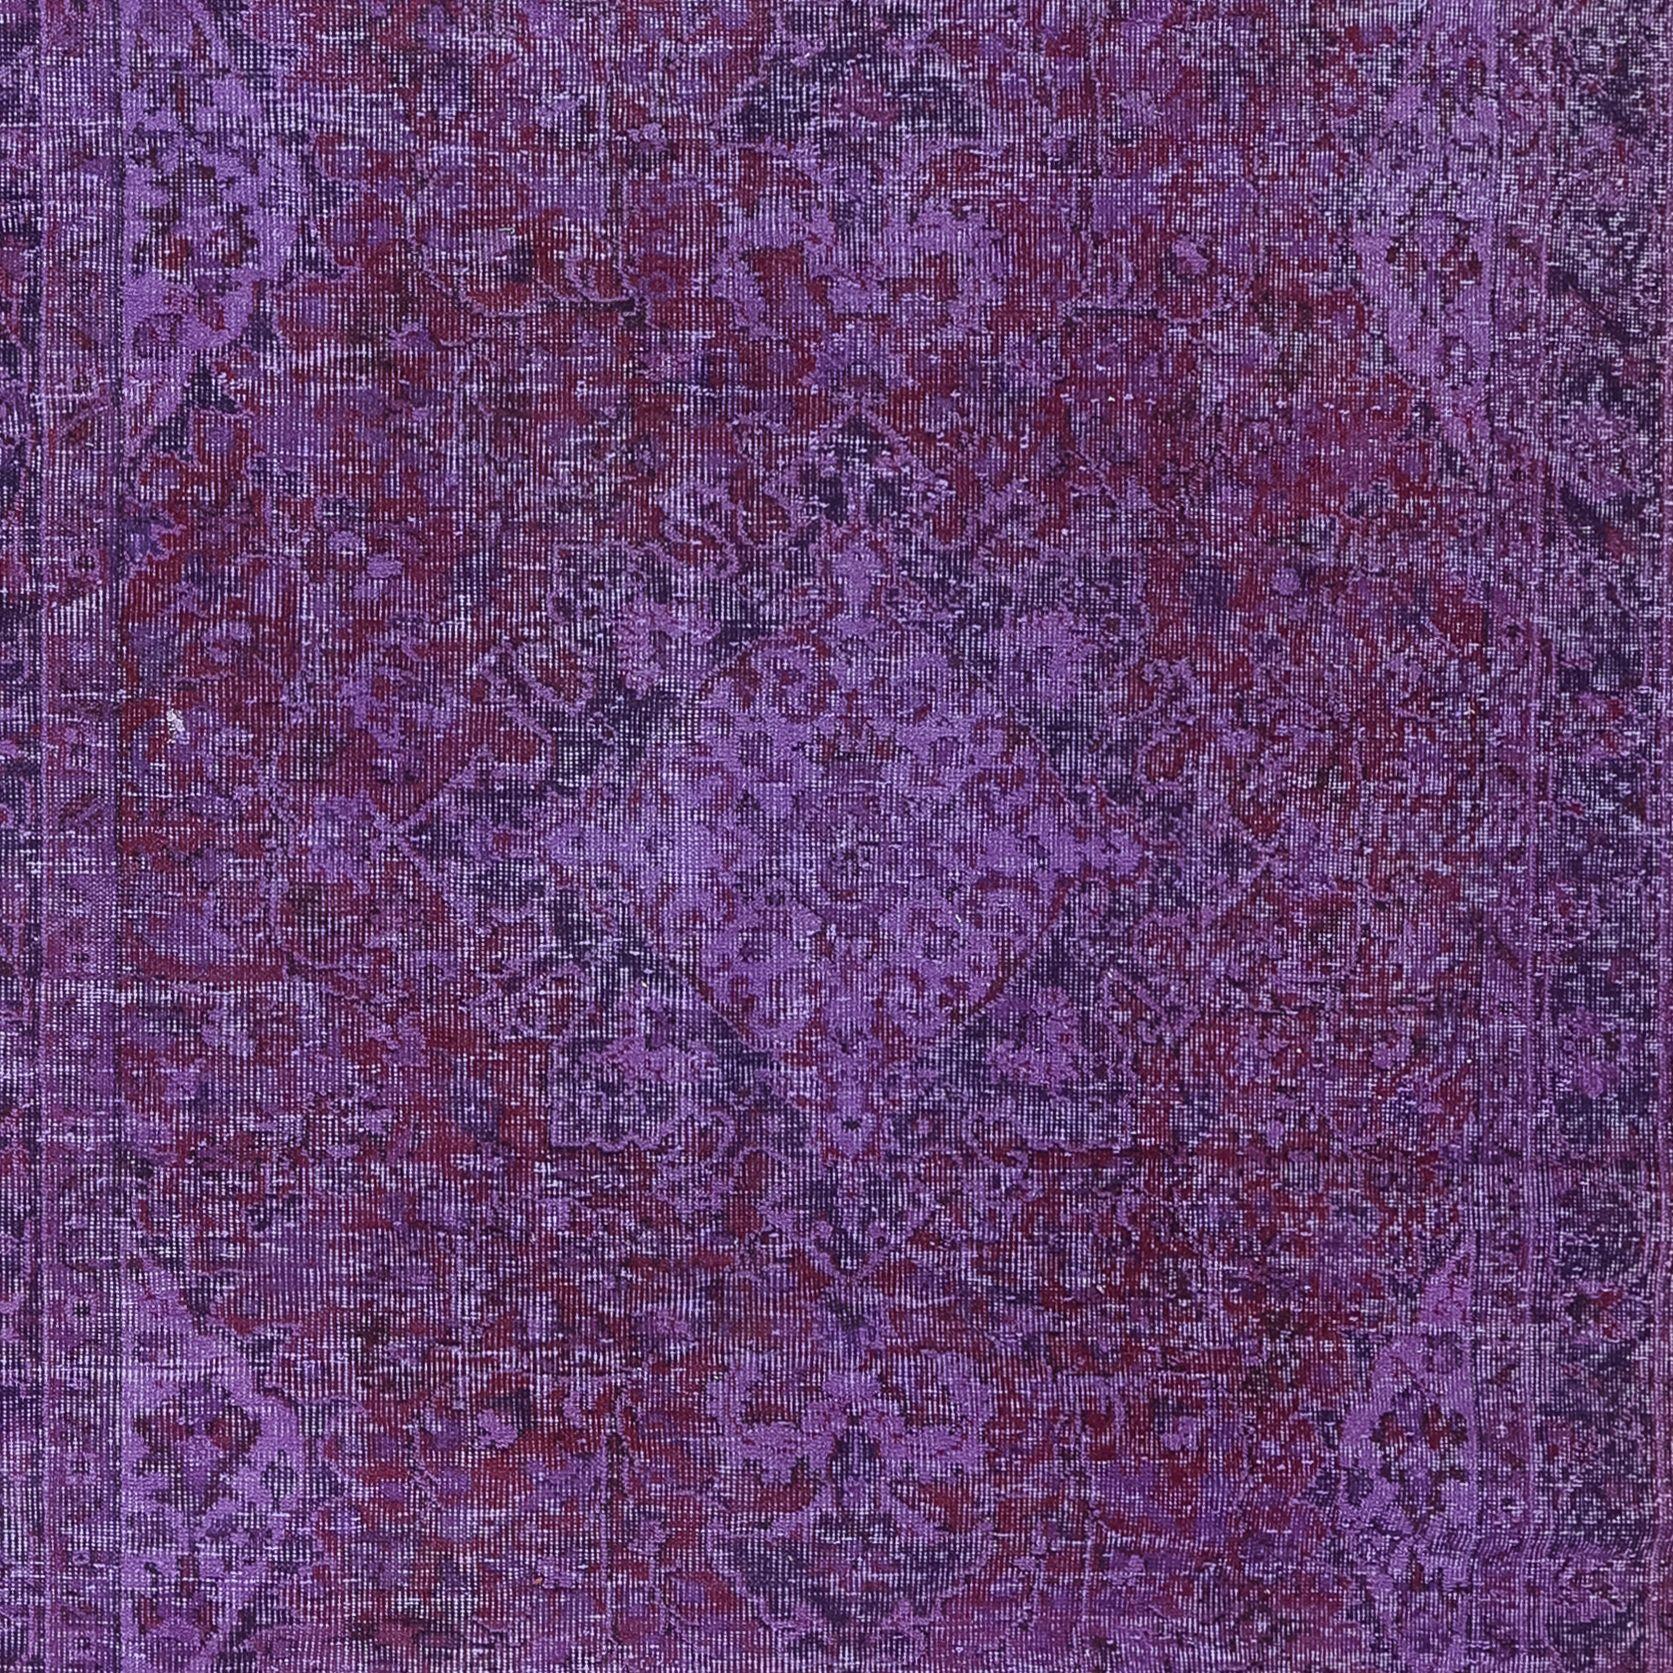 Hand-Woven 5.4x9.3 Ft Purple Handmade Wool Area Rug, Modern Turkish Carpet for Living Room For Sale